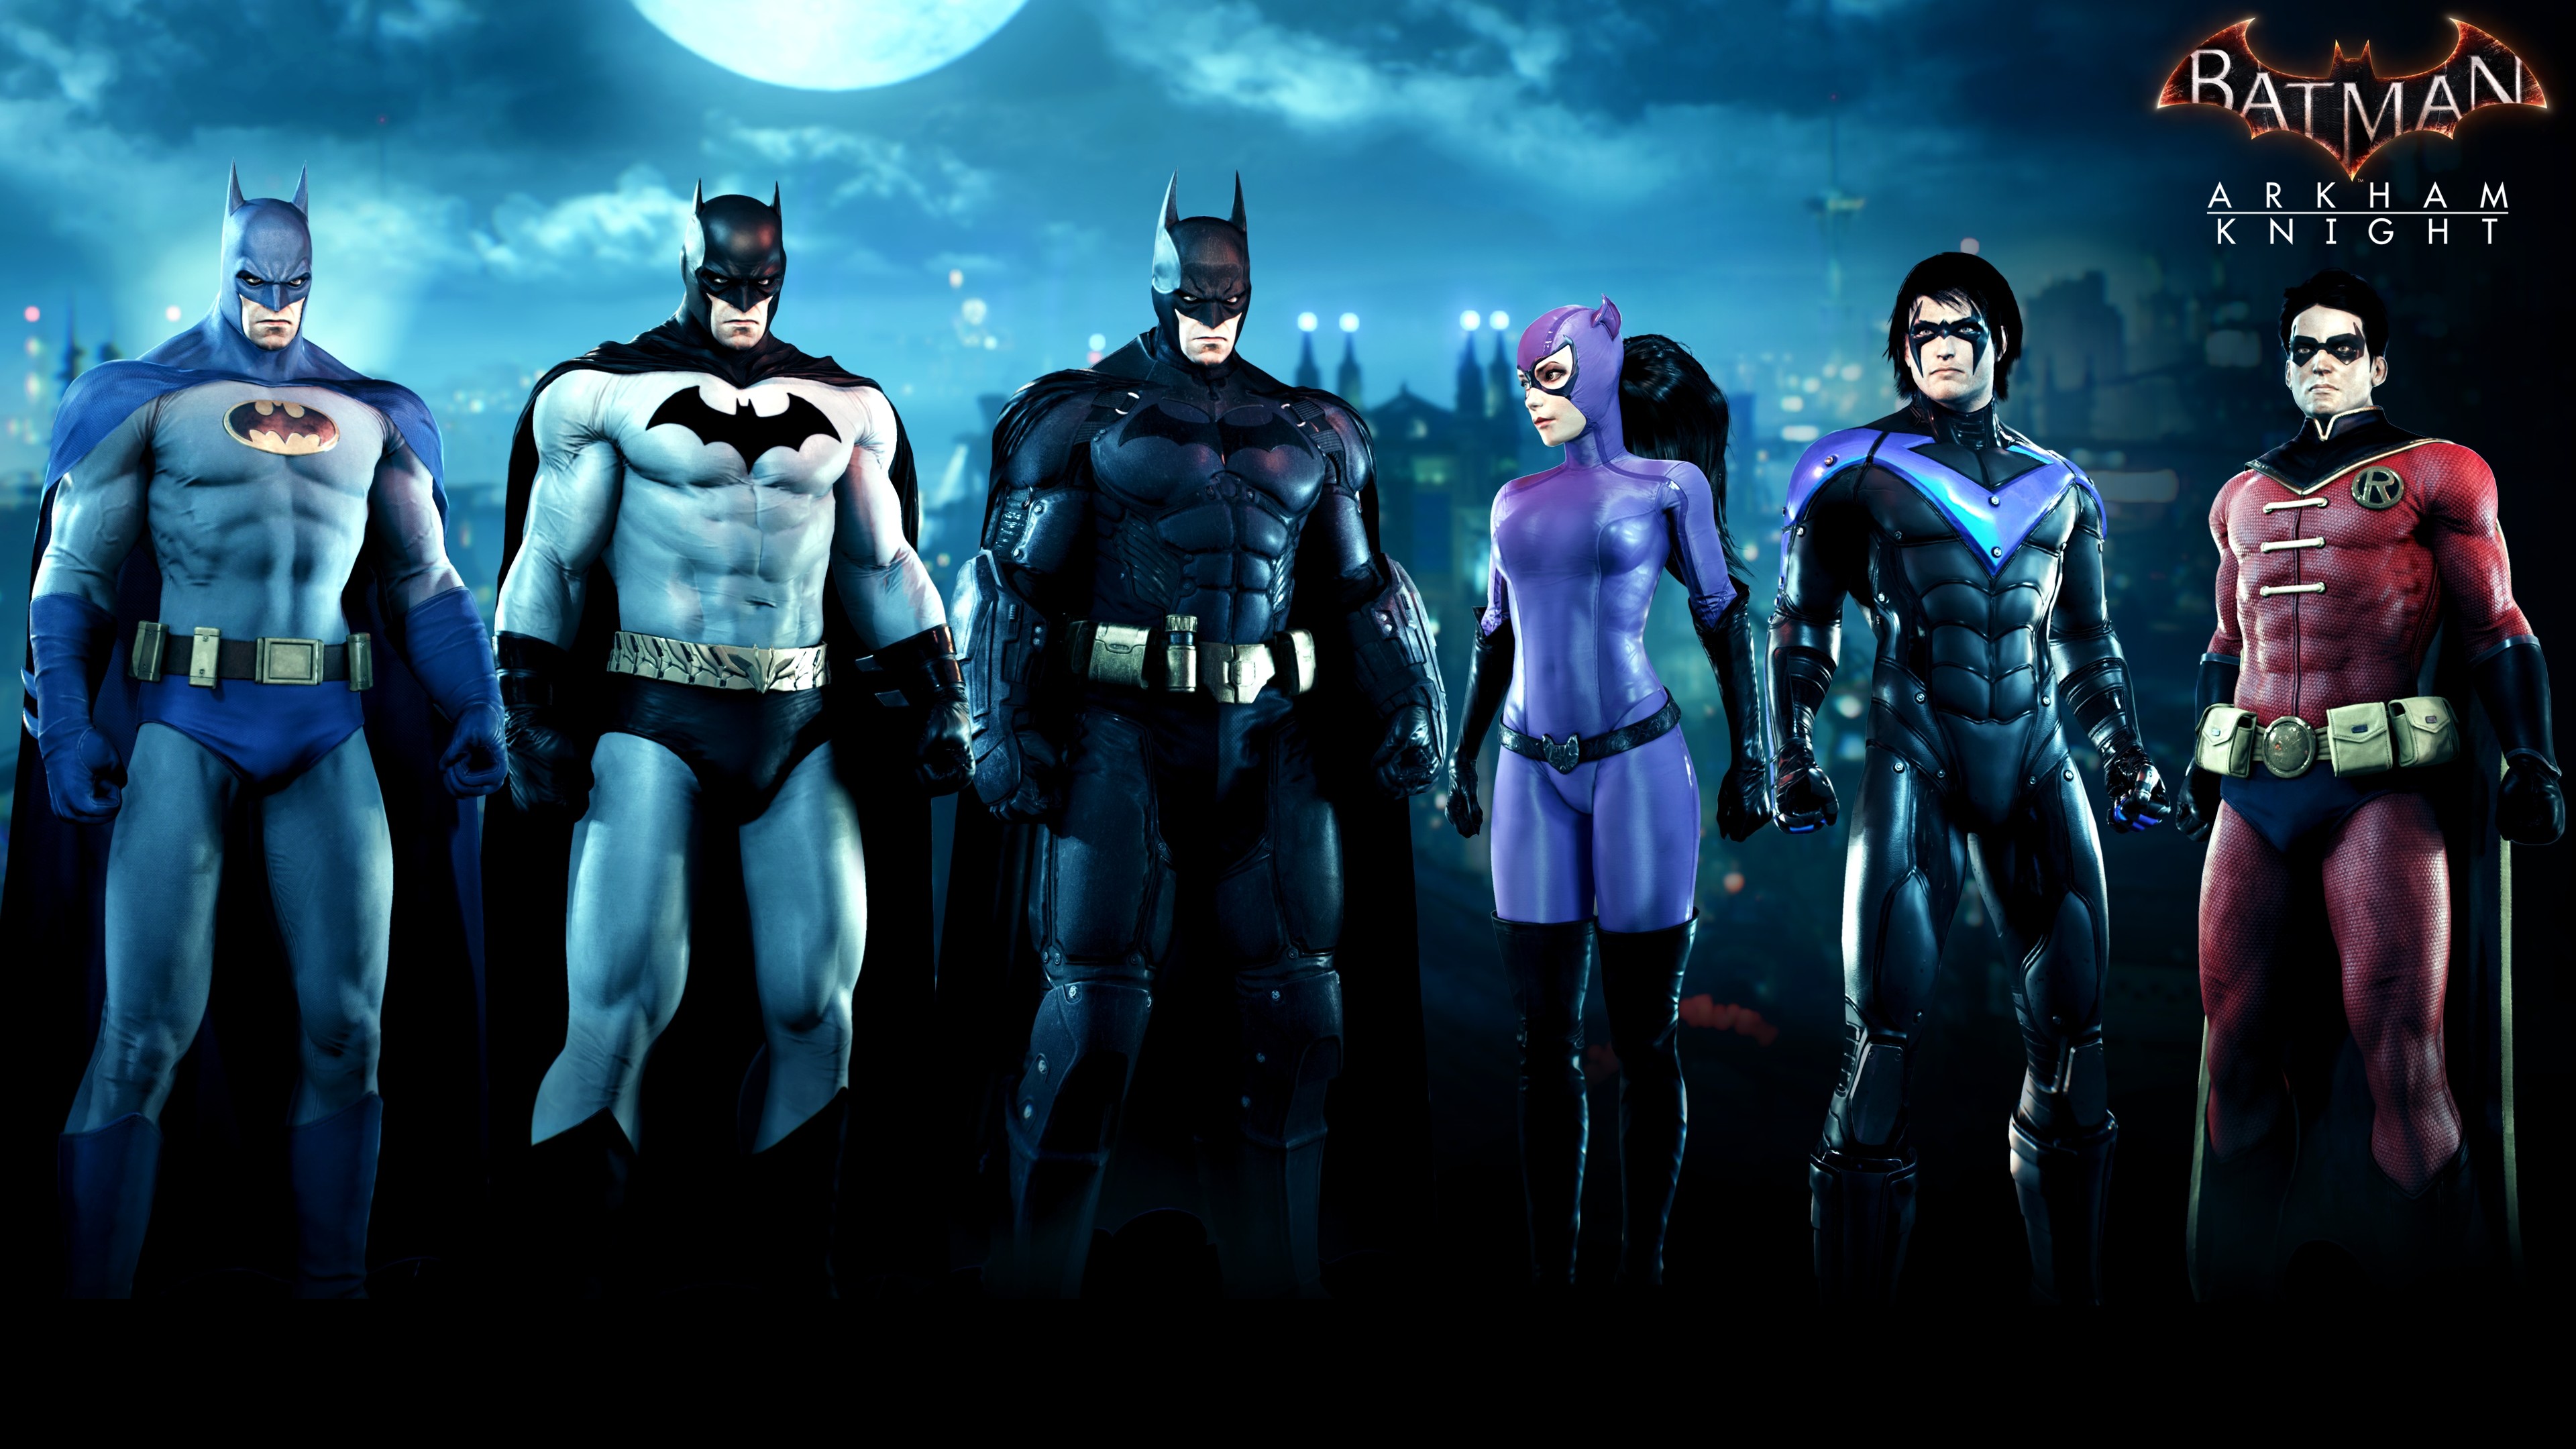 3840x2160 Batman Arkham Knight Trailer, Nightwing Wallpaper, Black Batman, Wallpaper  Free Download, Knights, Catwoman, Video Games, 1990s, Origins